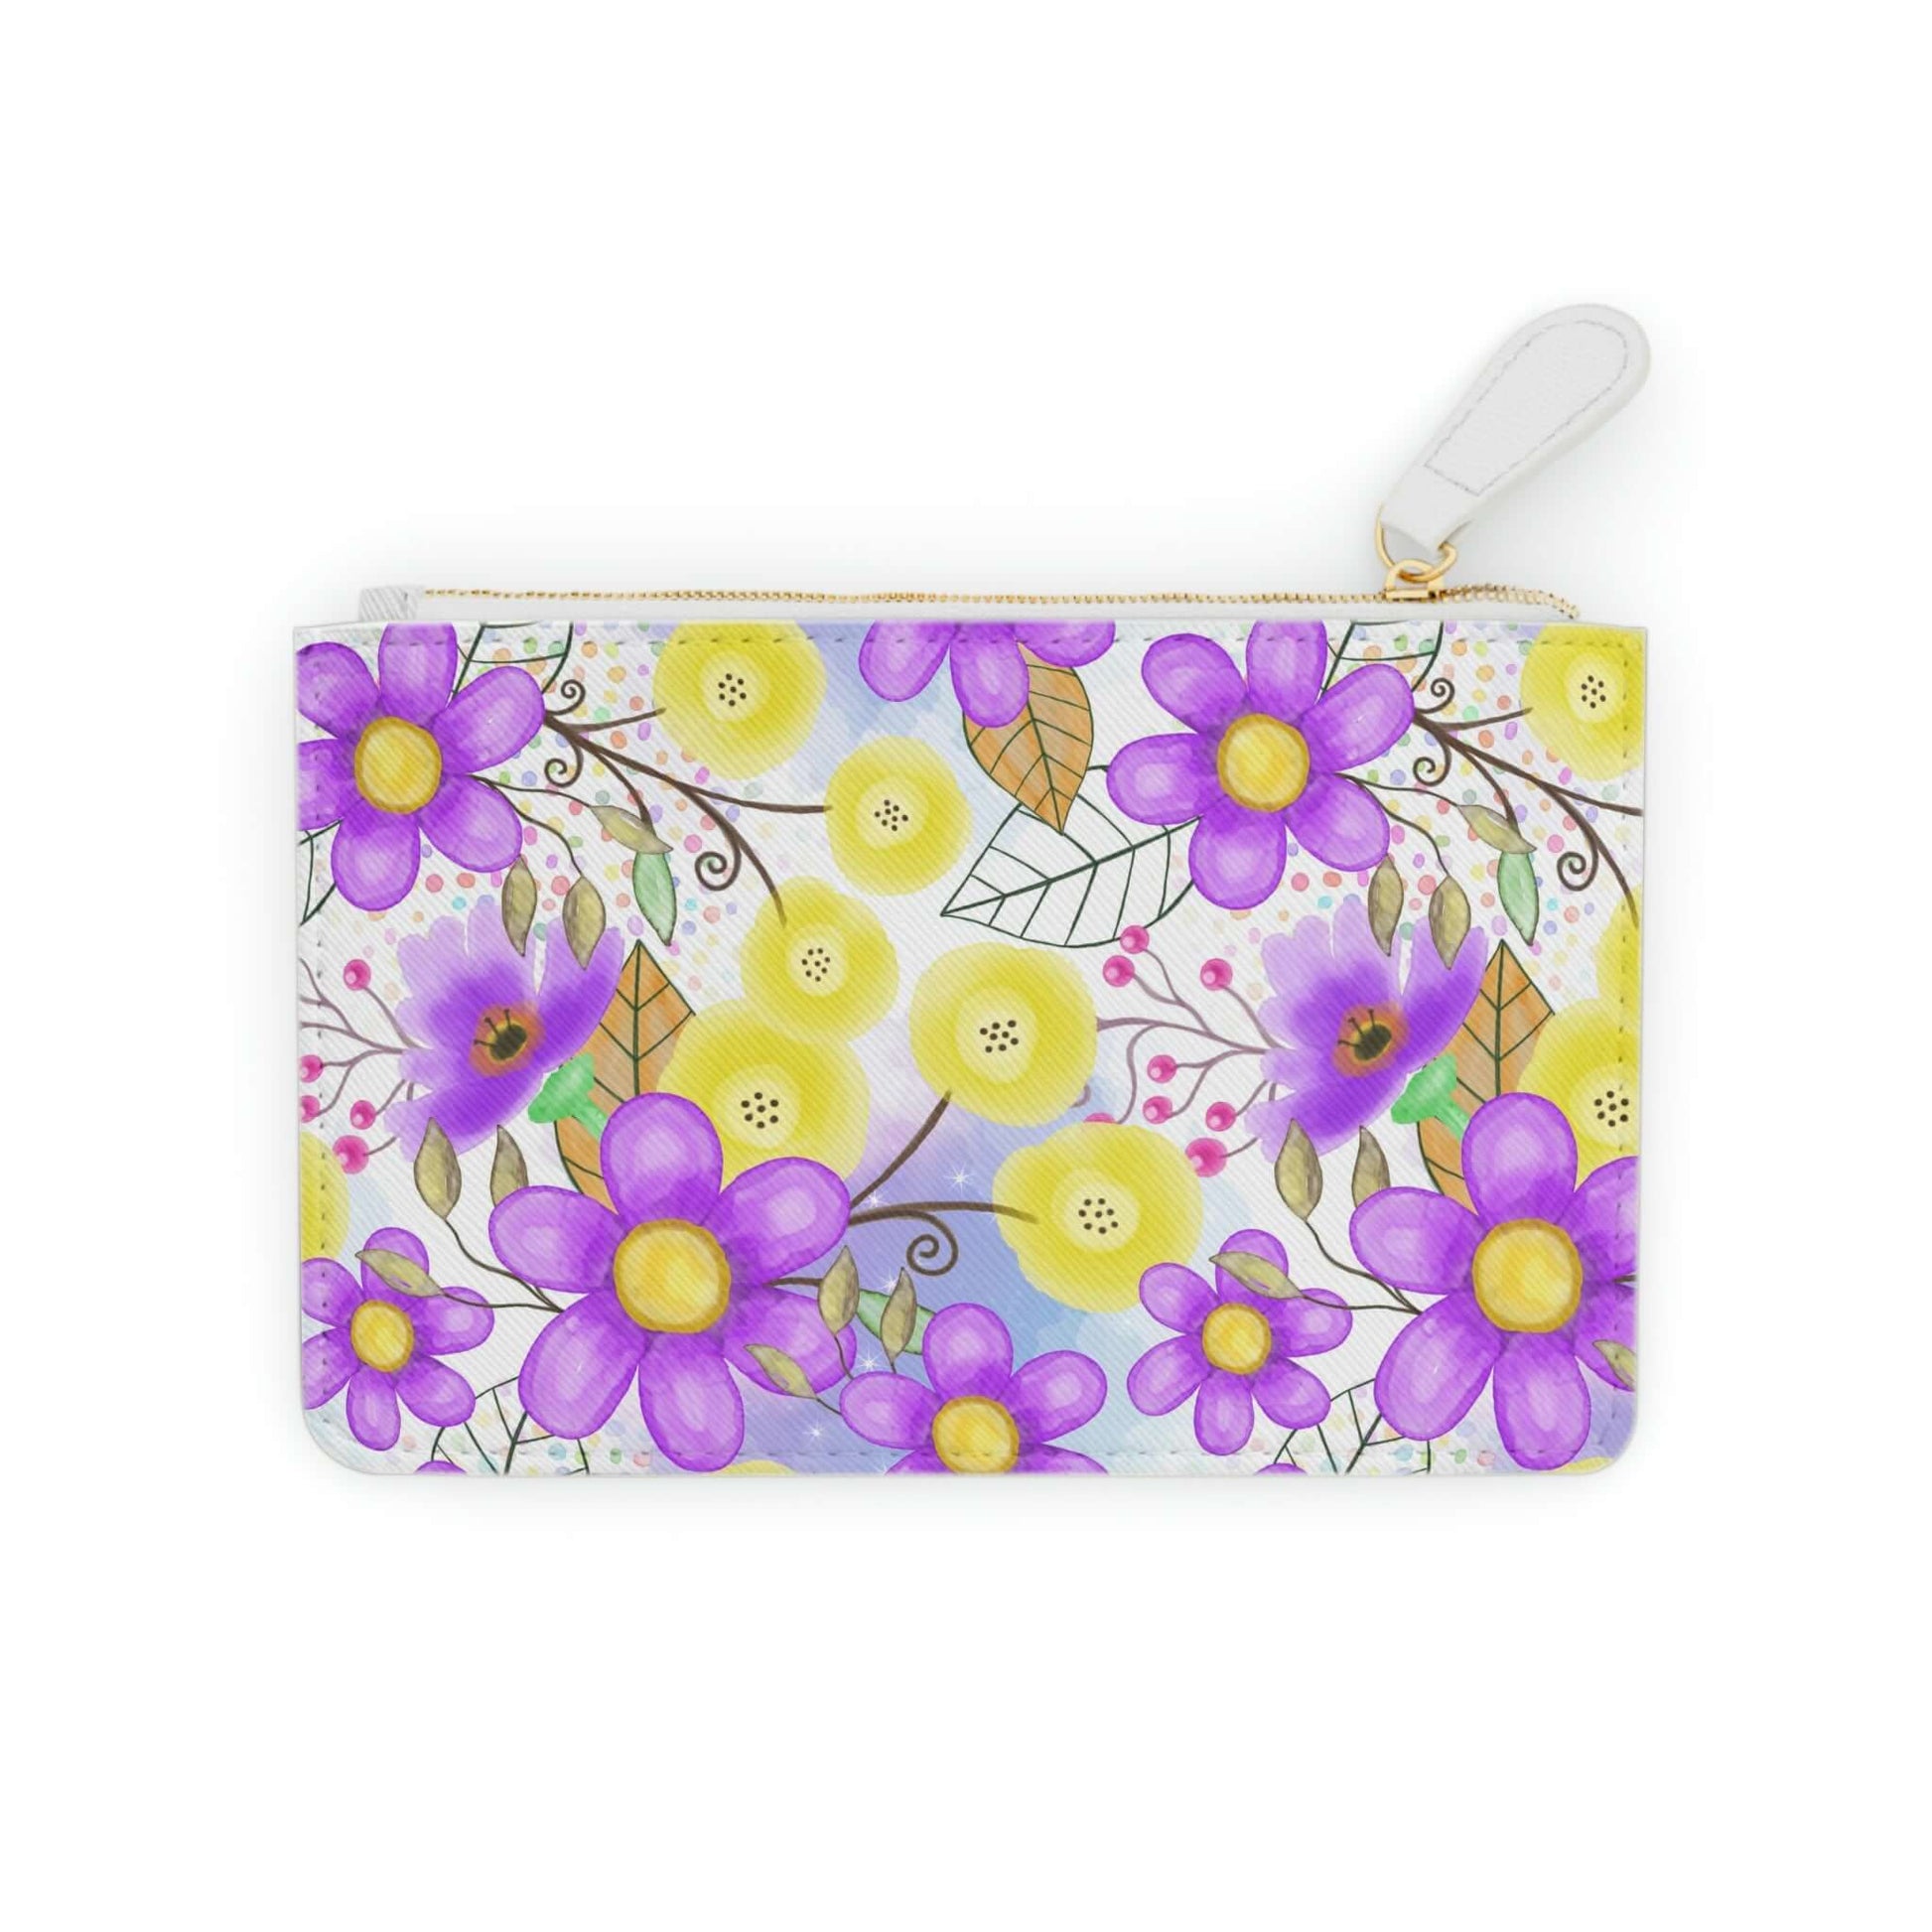 Lavender Floral Mini Clutch Bag 6.3” x 4” White